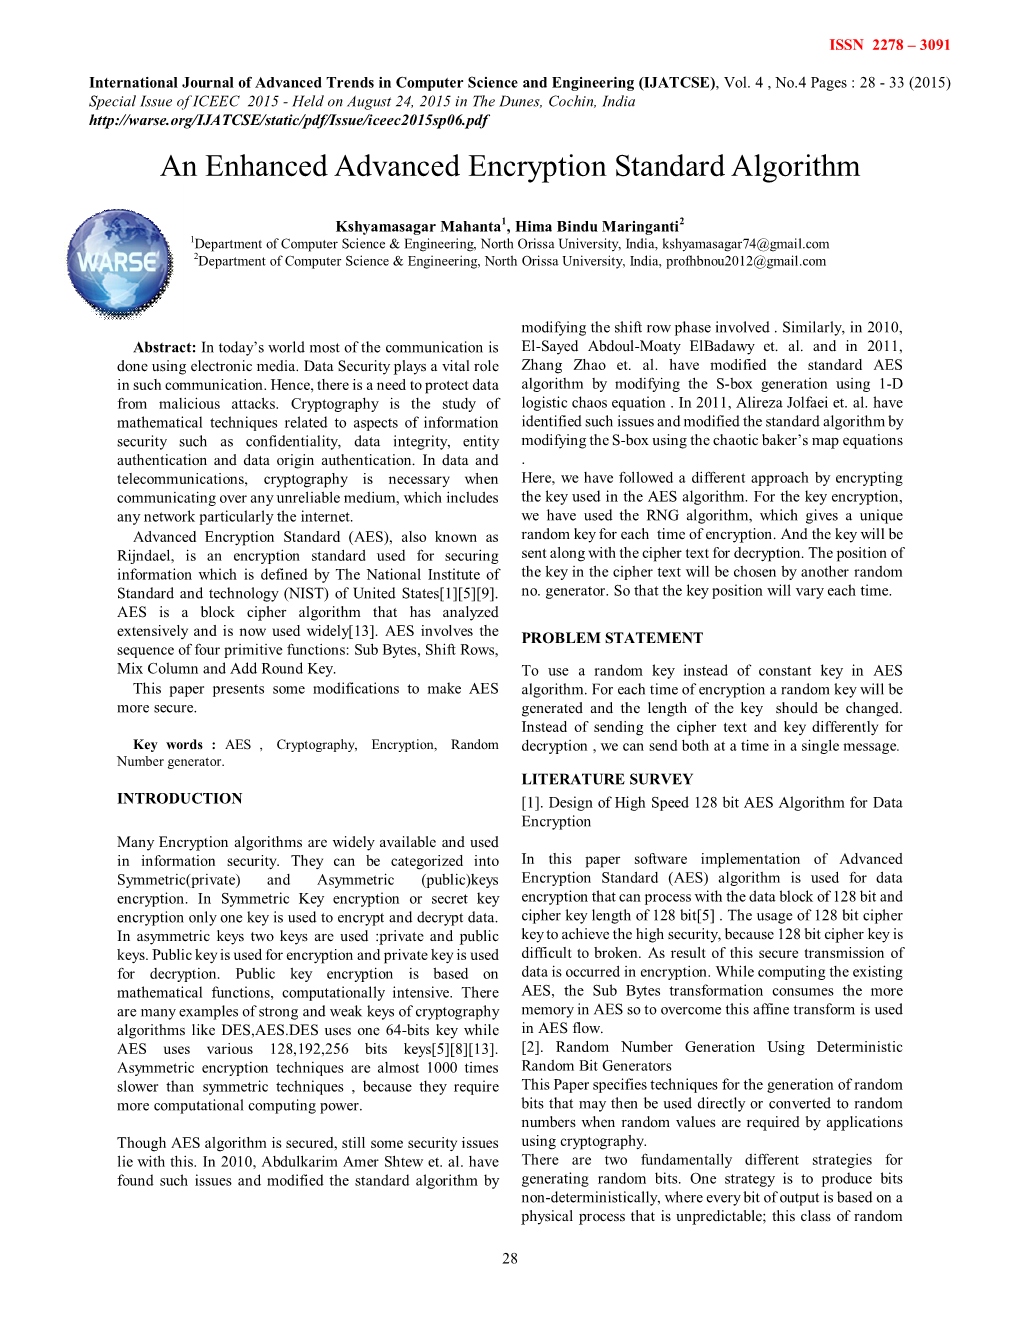 An Enhanced Advanced Encryption Standard Algorithm